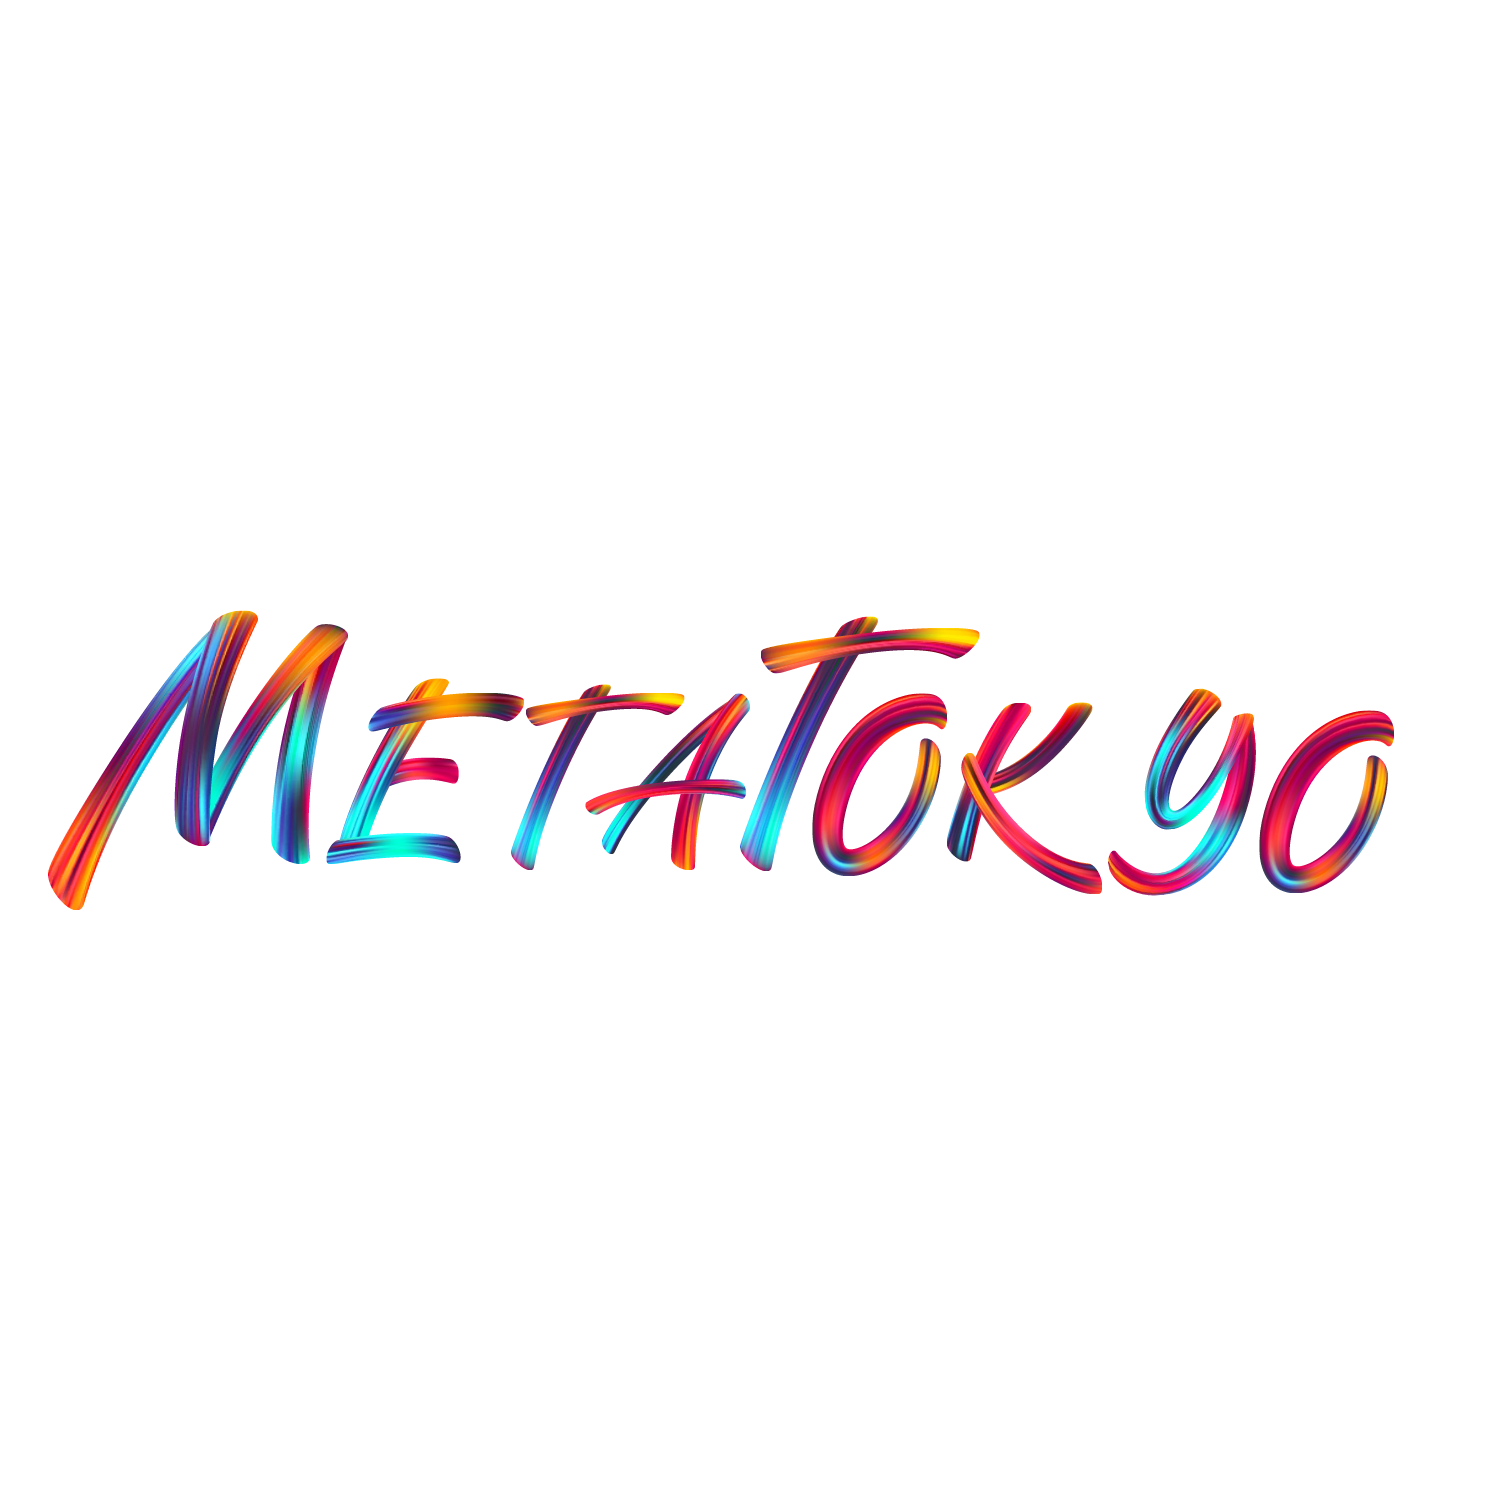 MetaTokyo Studio